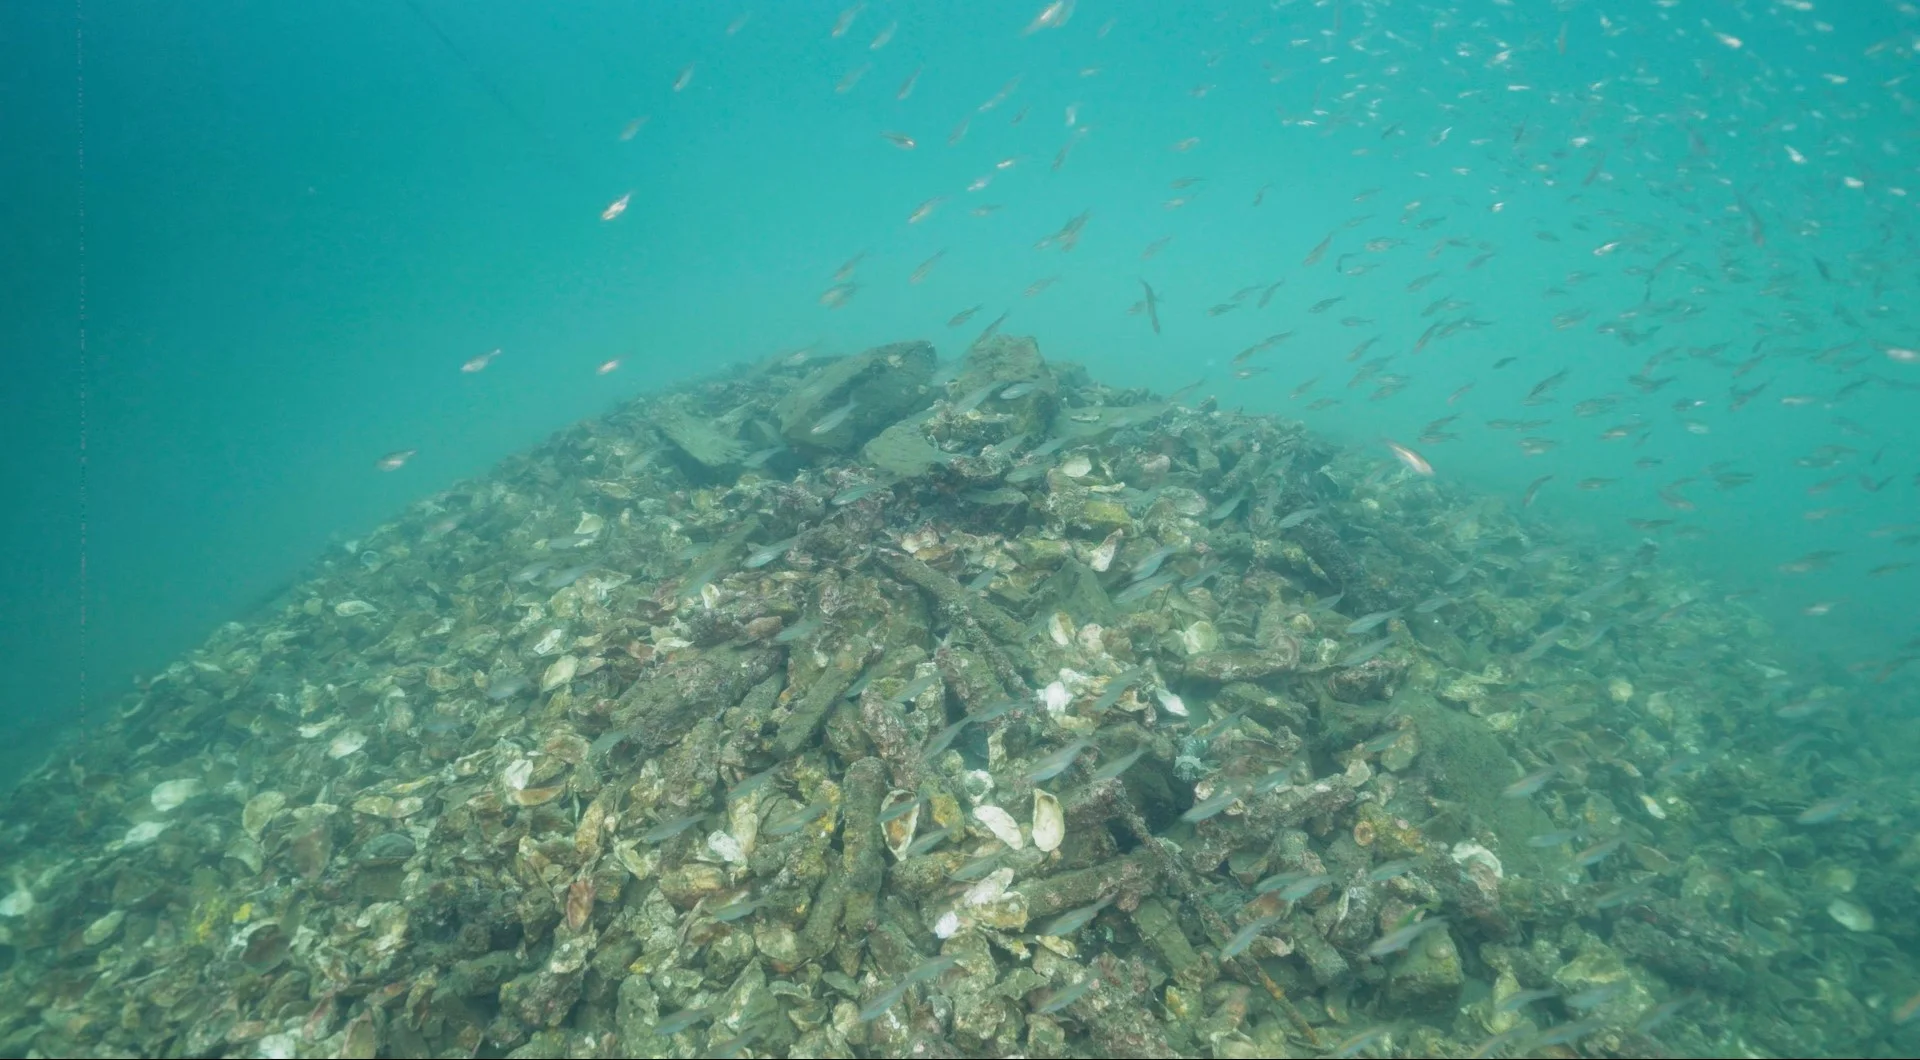 TNC現時在吐露港魚排底新造了蠔礁。Anniqa說，基於漁民在該區養魚，令養魚區的水質一般，亦因太多營養，經常出現紅潮，希望透過建立吃藻類的蠔礁，吸收過多營養，改善養殖區的水質。圖中為吐露港的蠔礁。（圖片由大自然協會提供）